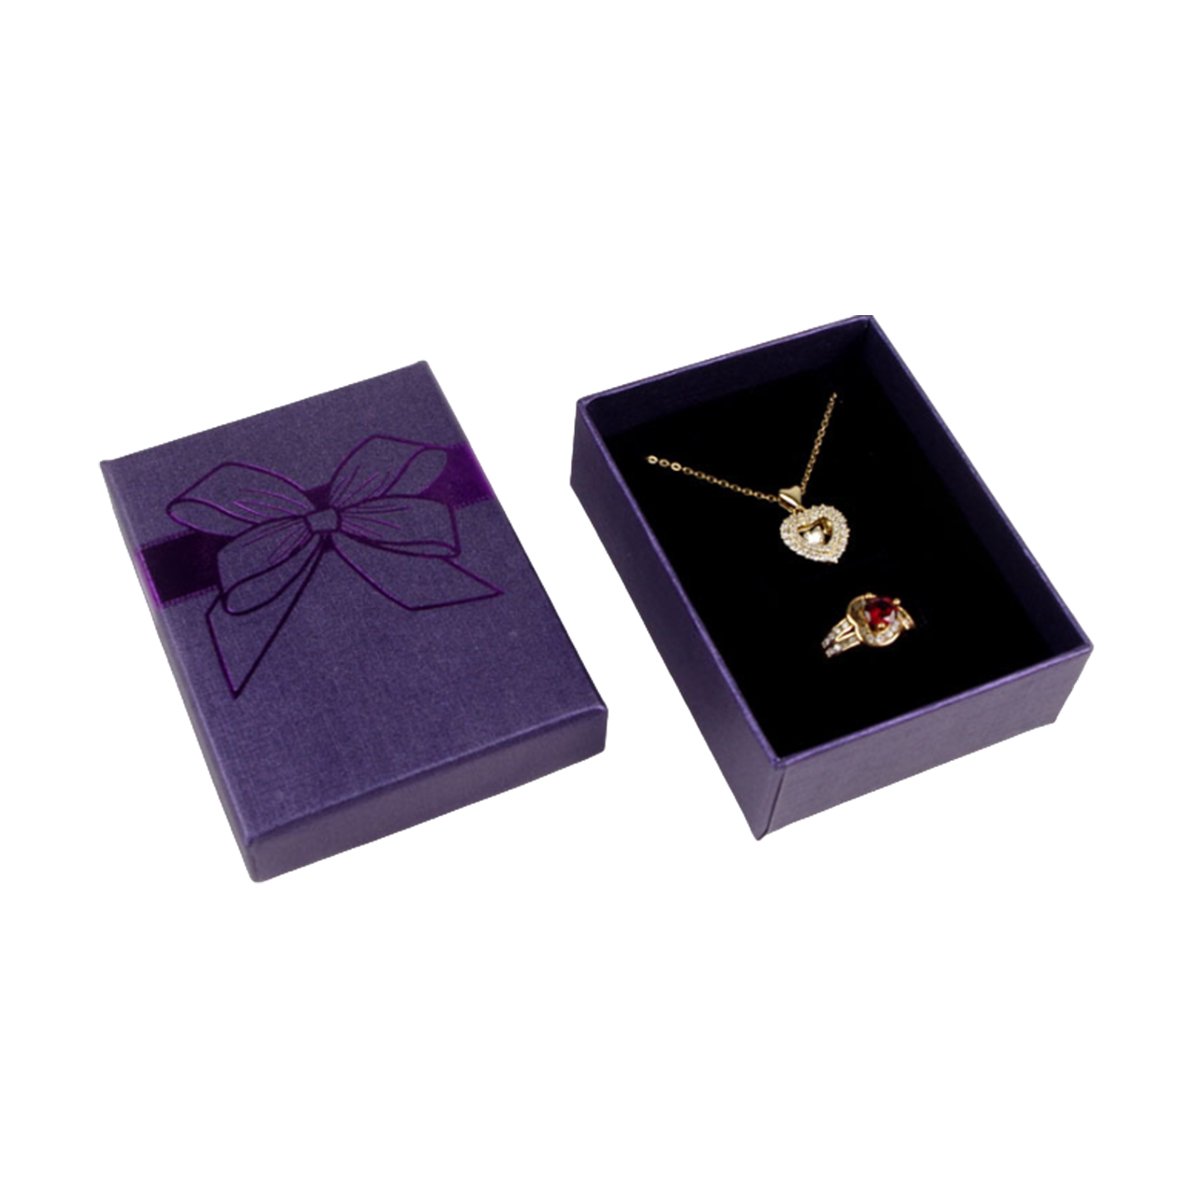 Elegant Jewelry Packaging Box Set for Beautiful Display